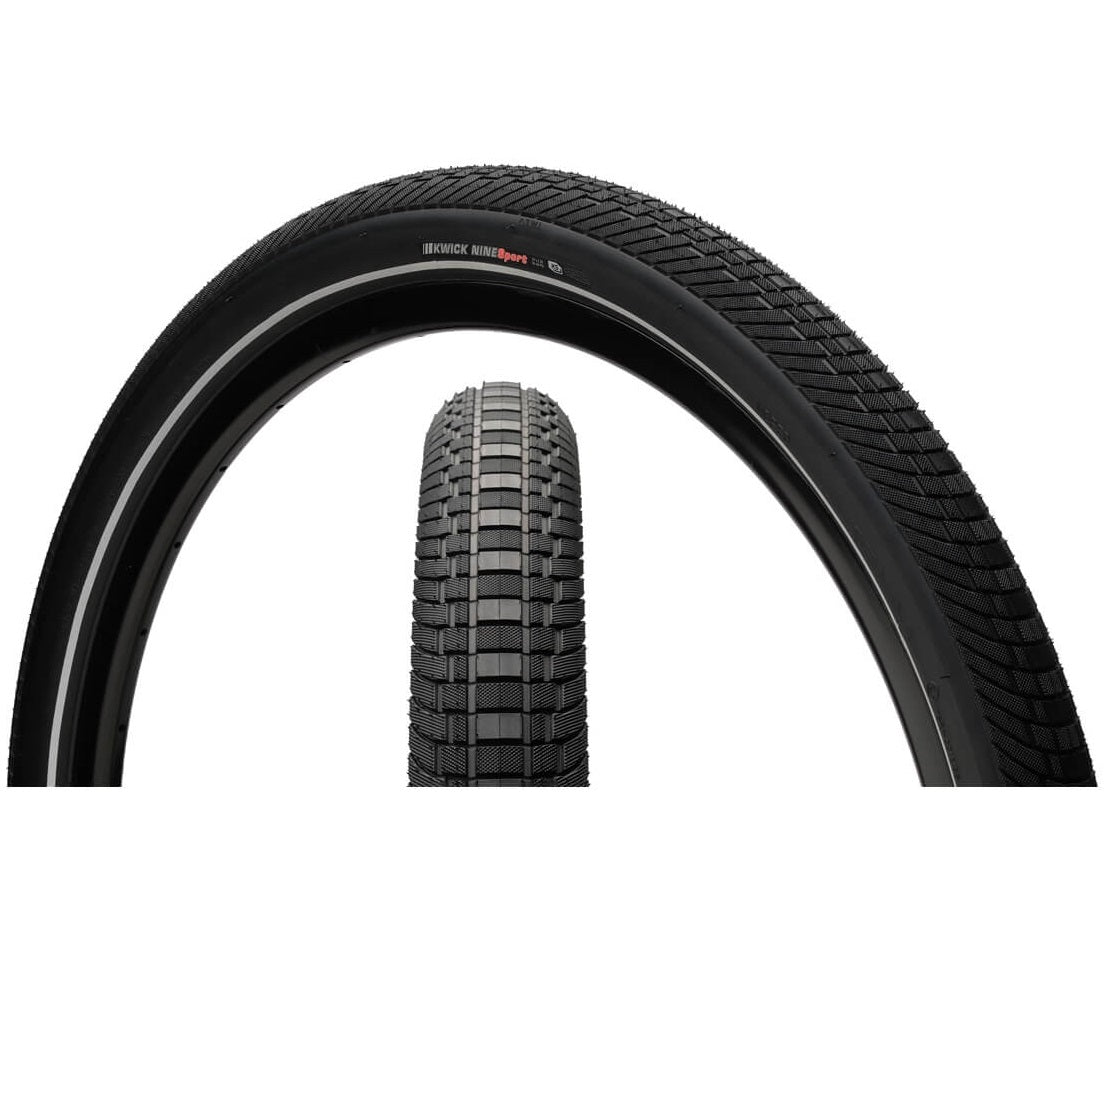 Kenda K1052 Kwick Nine 29x2.0 Tire - The Bikesmiths